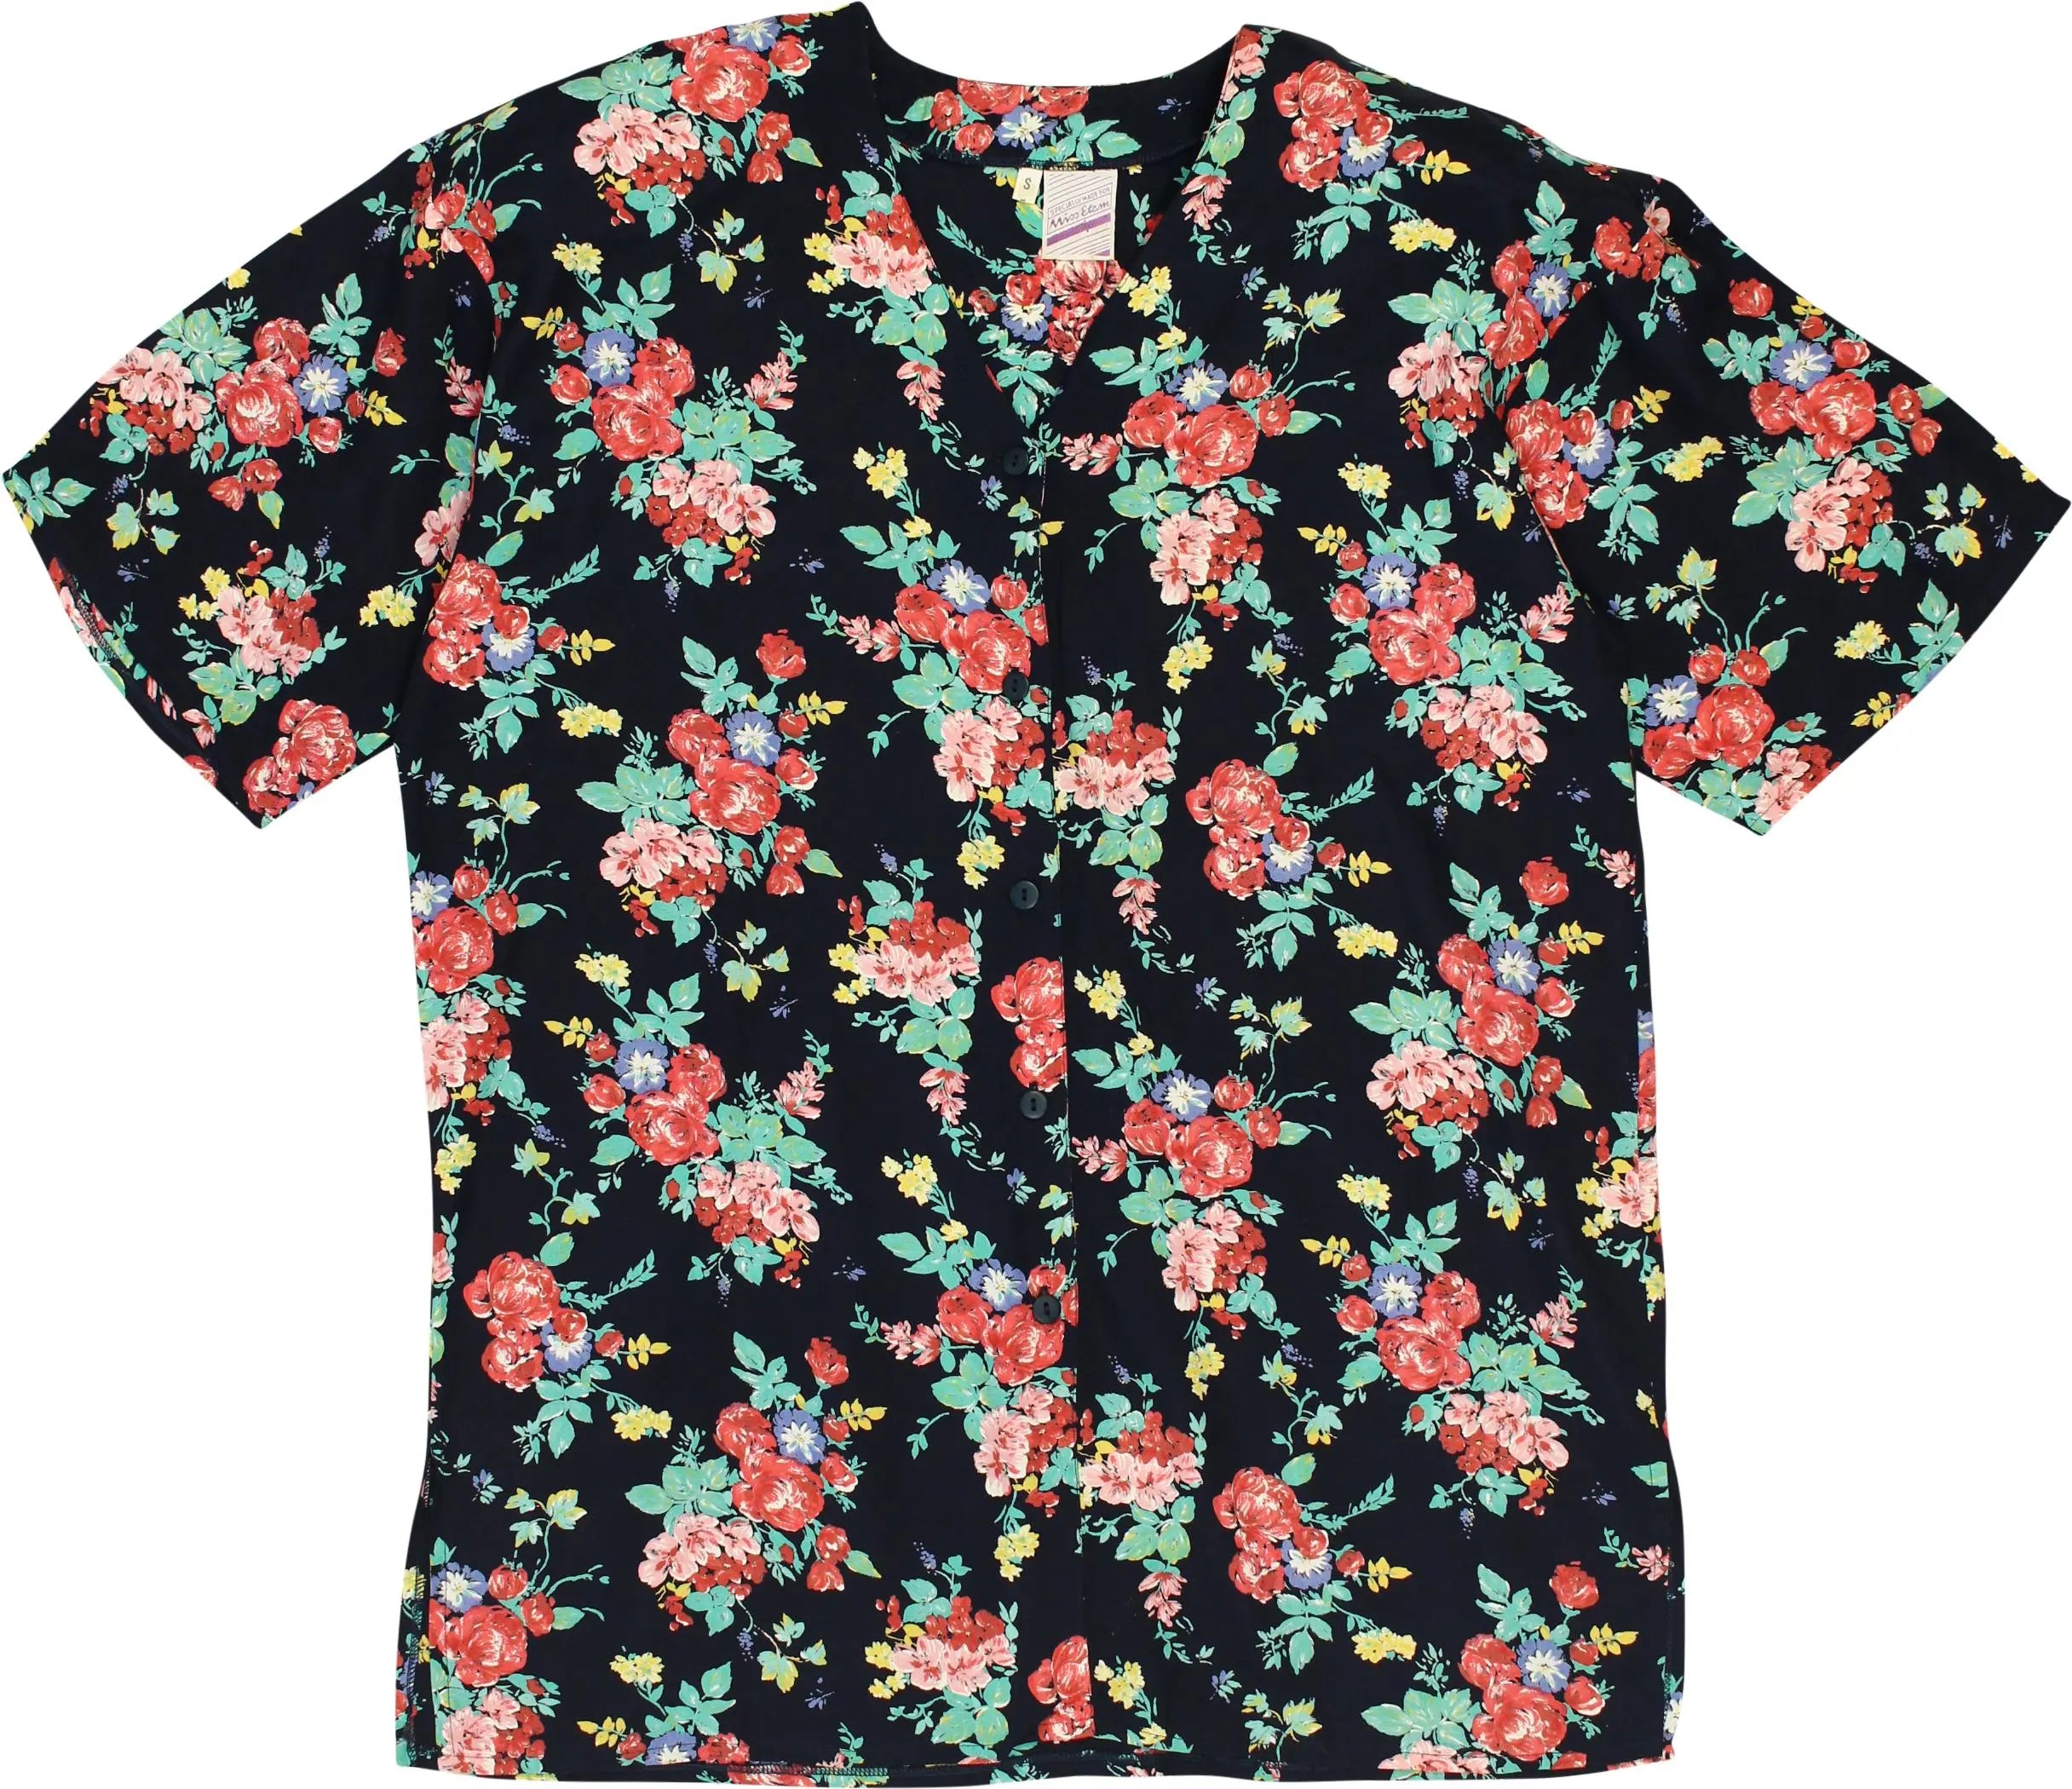 Miss Etam - 80s Floral Shirt- ThriftTale.com - Vintage and second handclothing